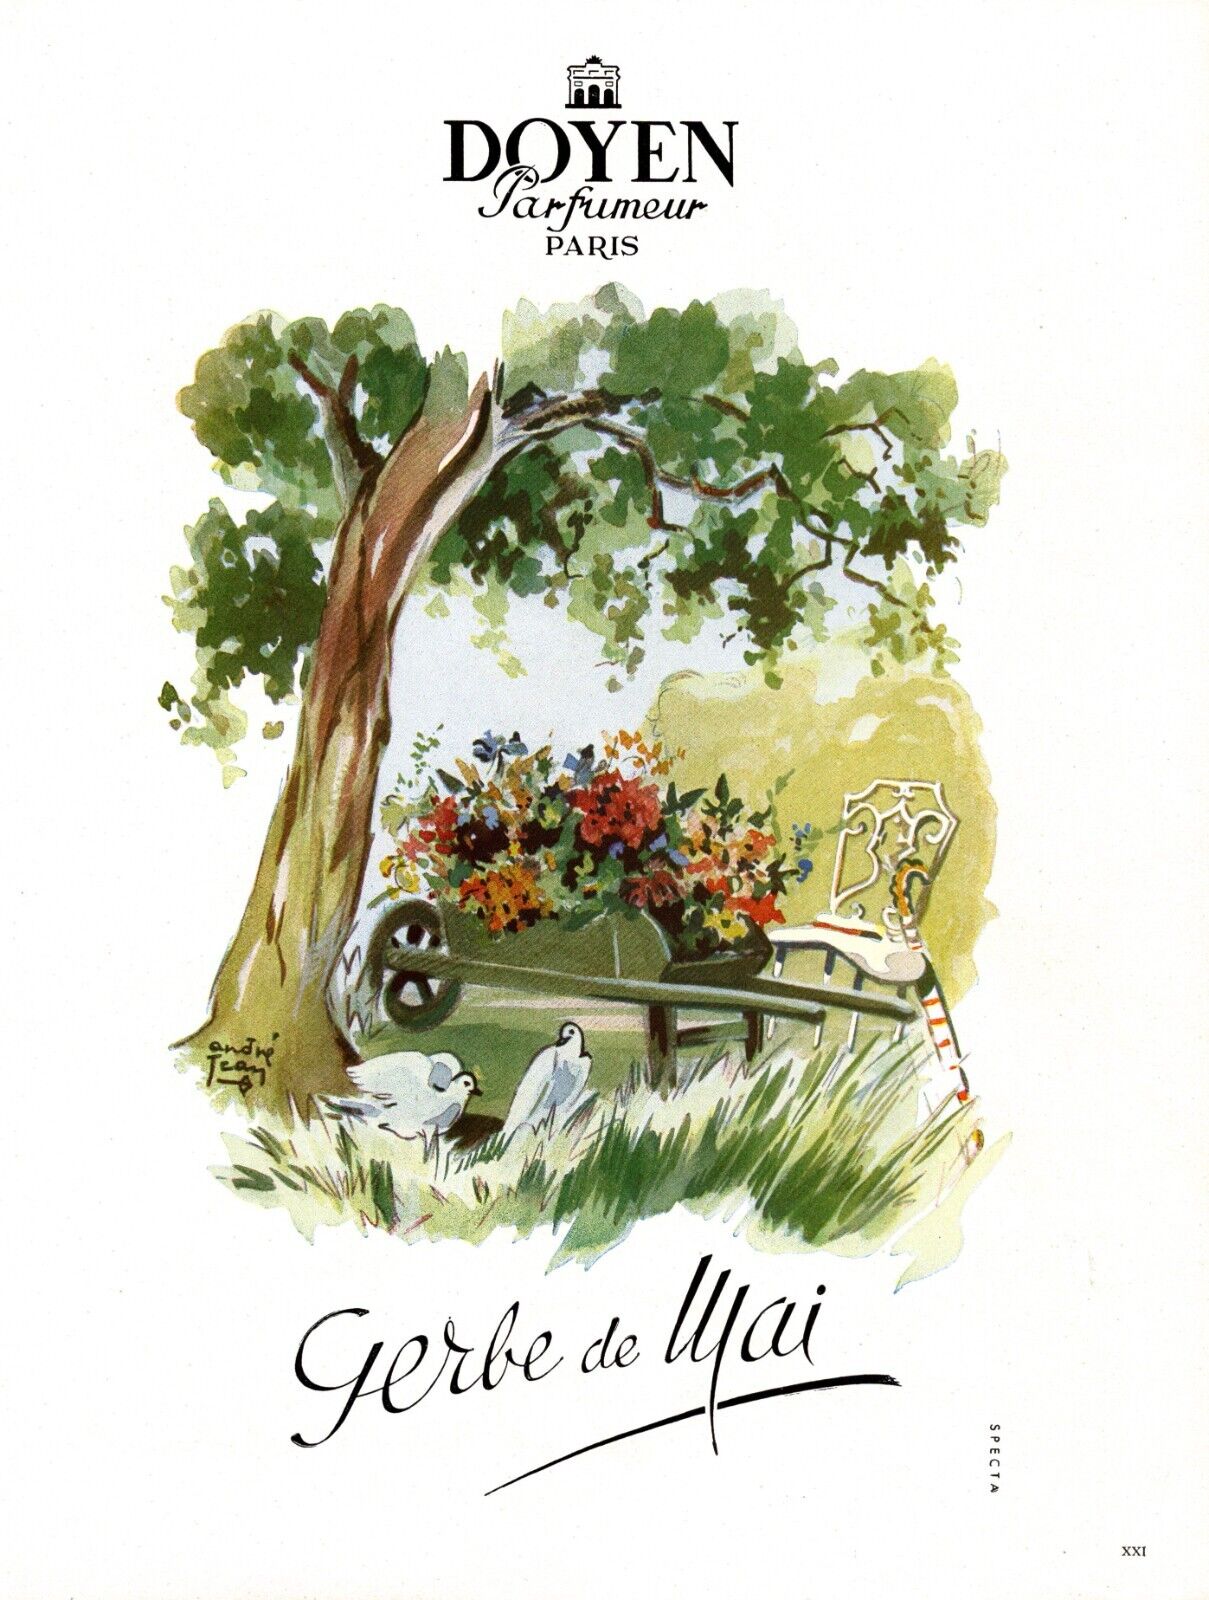 Original French Vintage Ad - Doyen Gerbe De Mai Perfume - André Jean - 1947